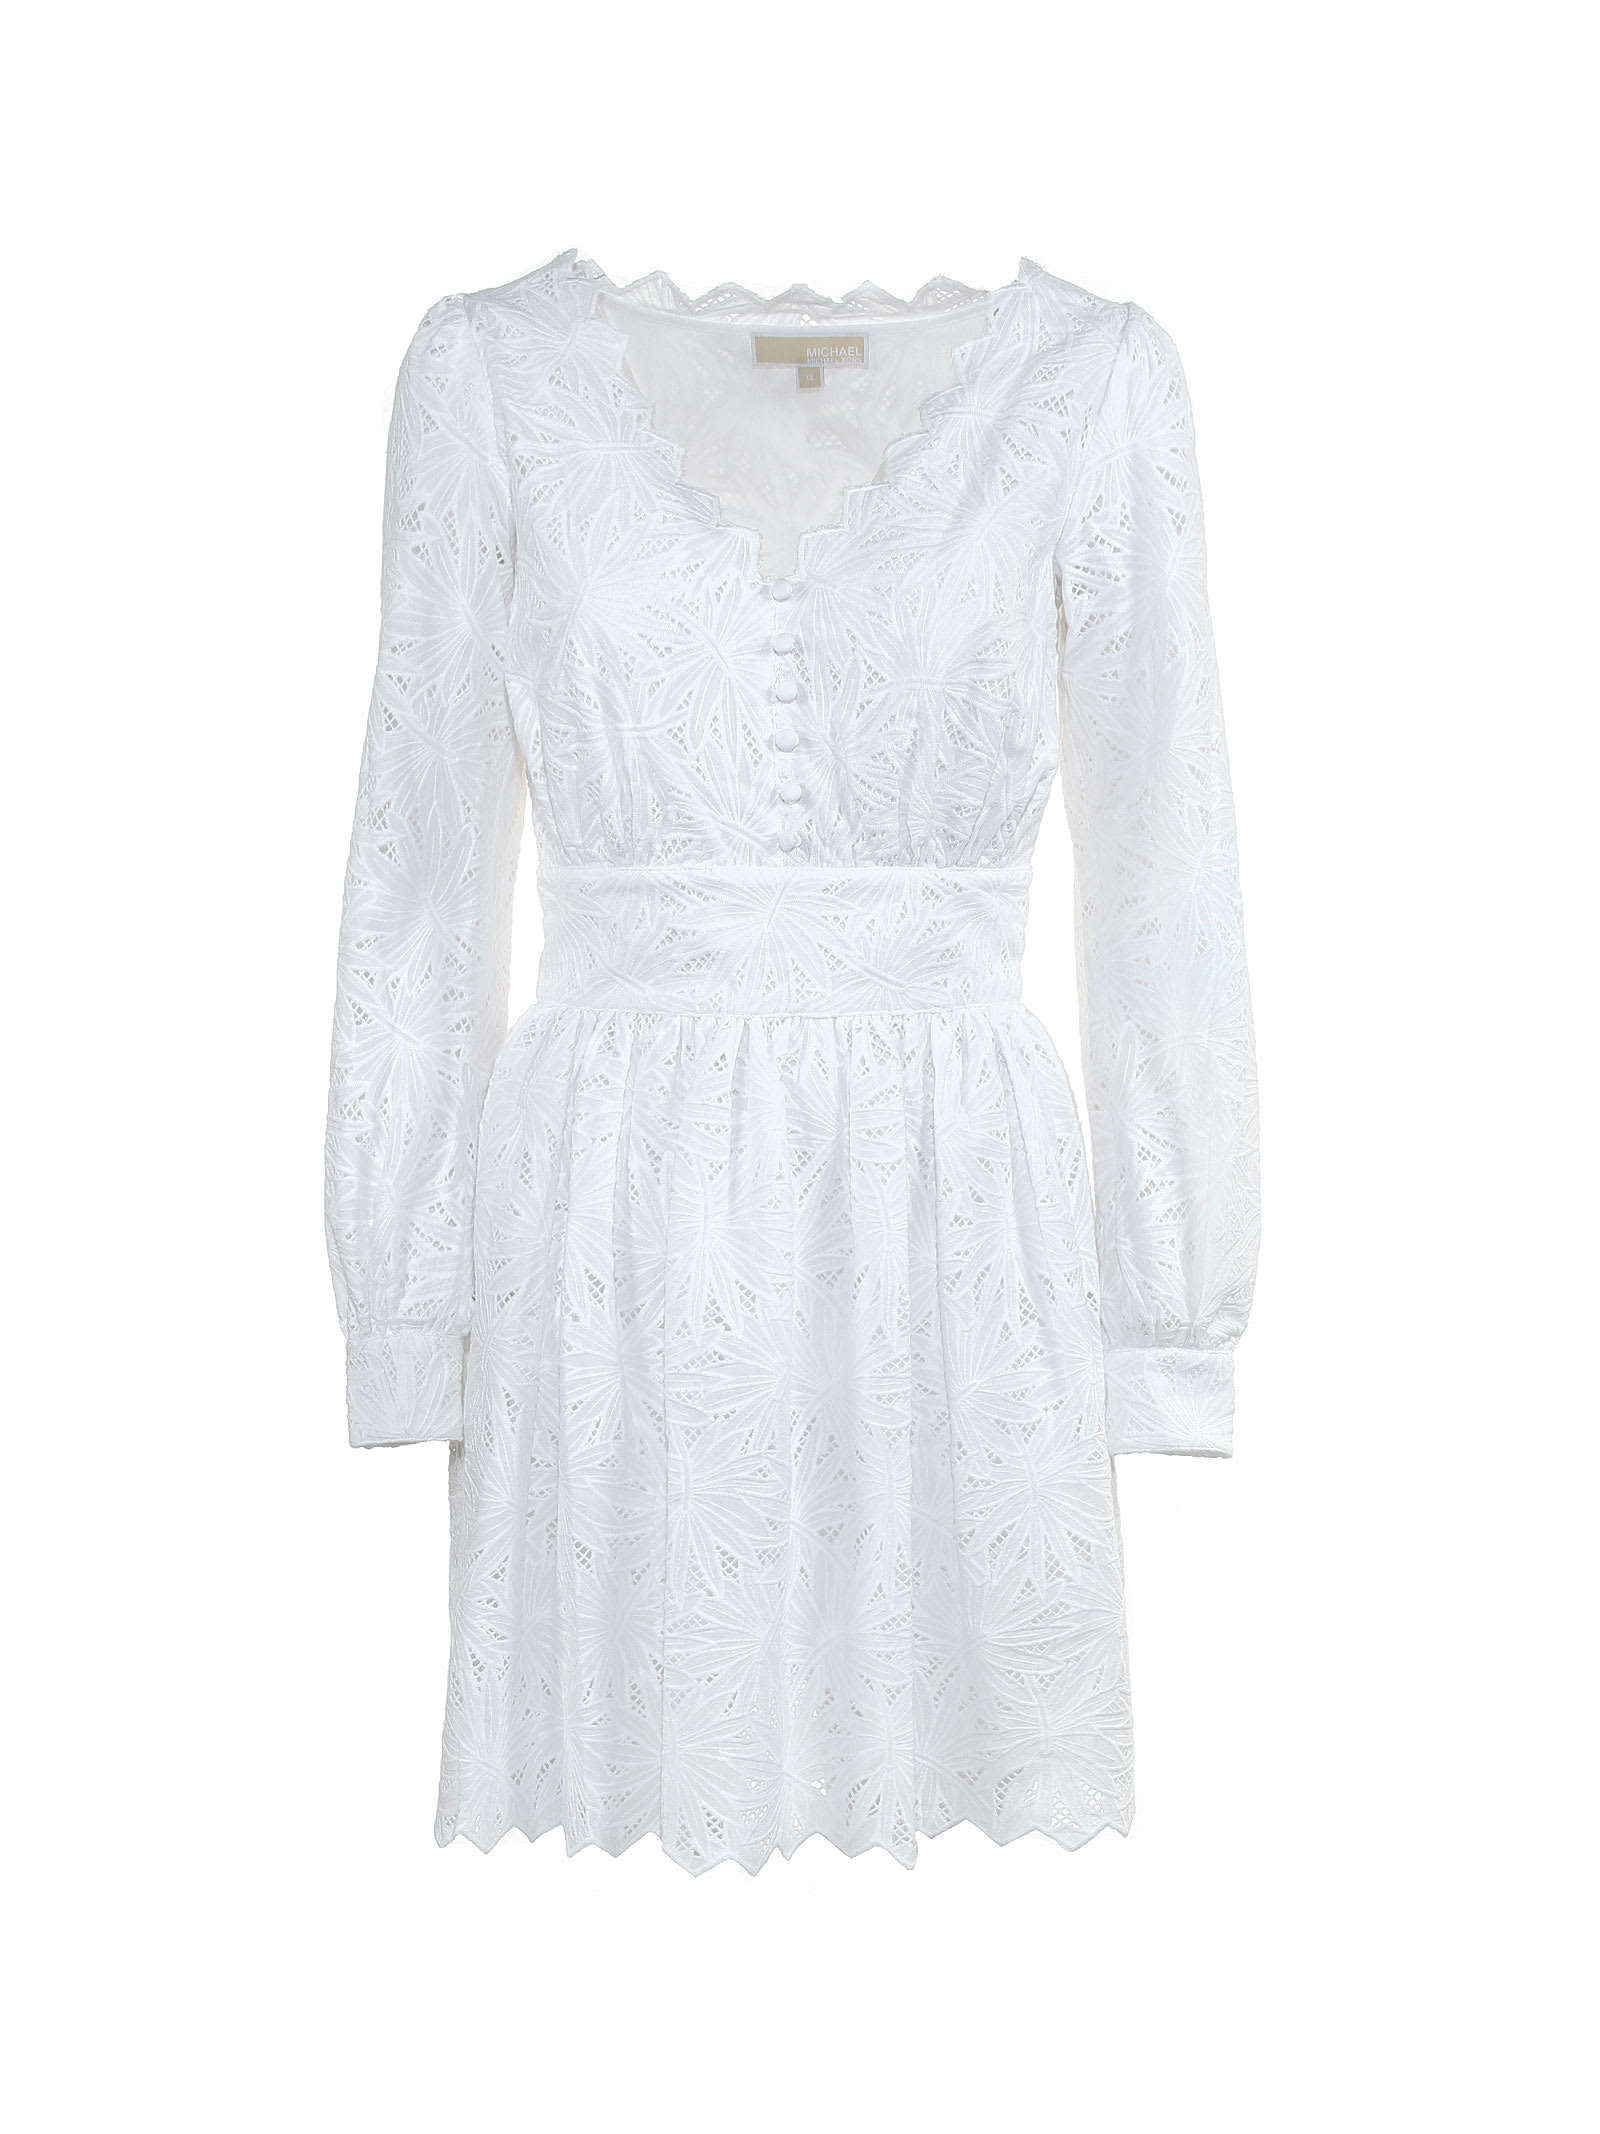 Michael Kors White Lace Dress